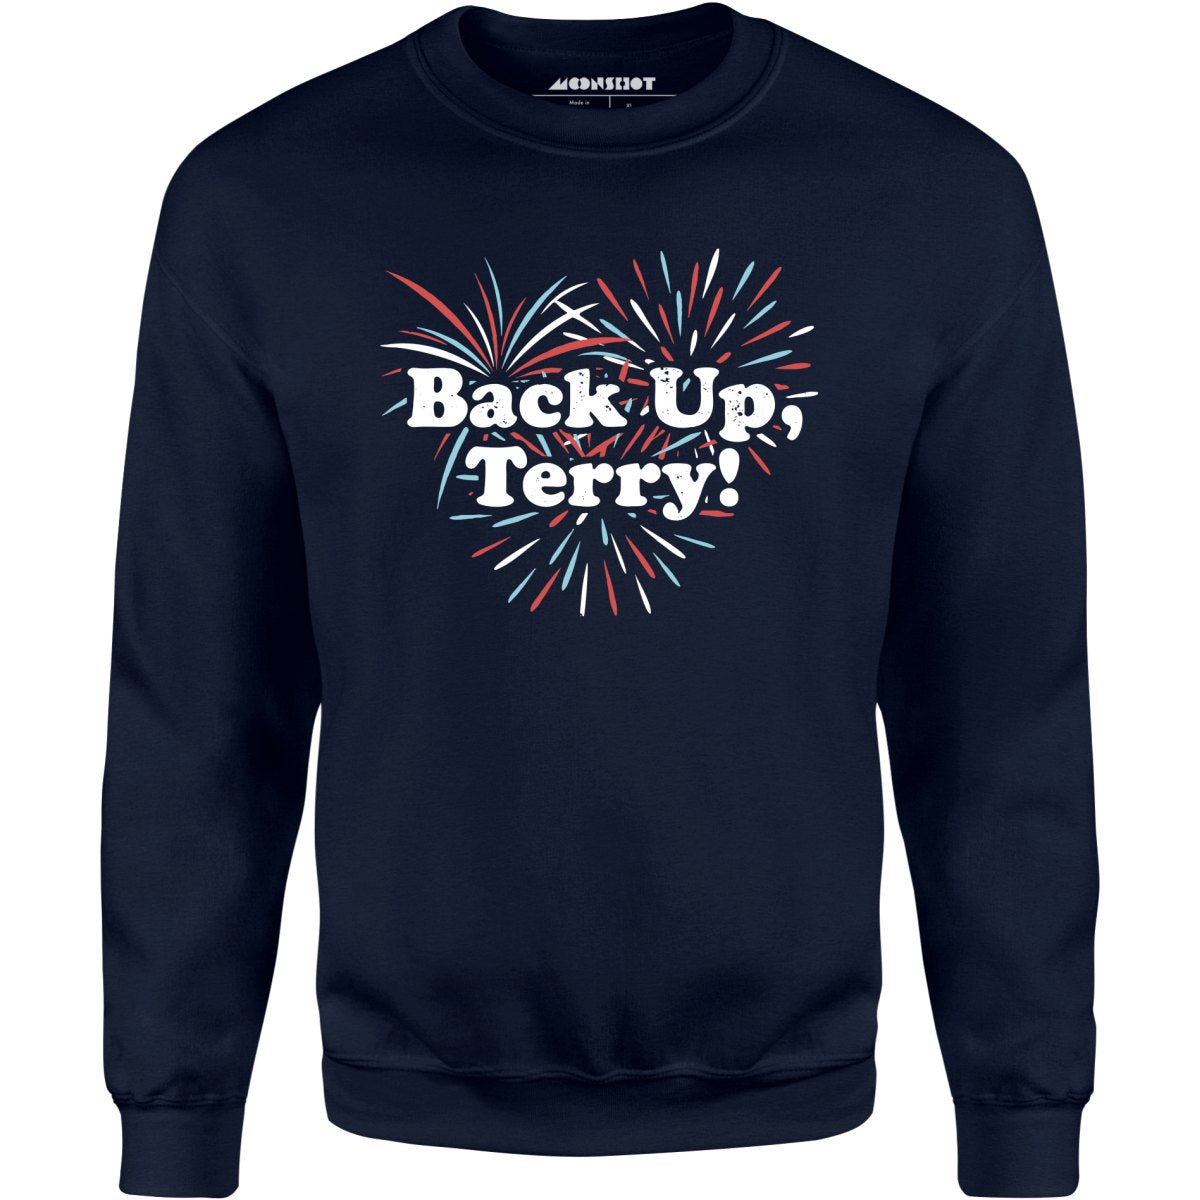 Back Up, Terry! - Unisex Sweatshirt